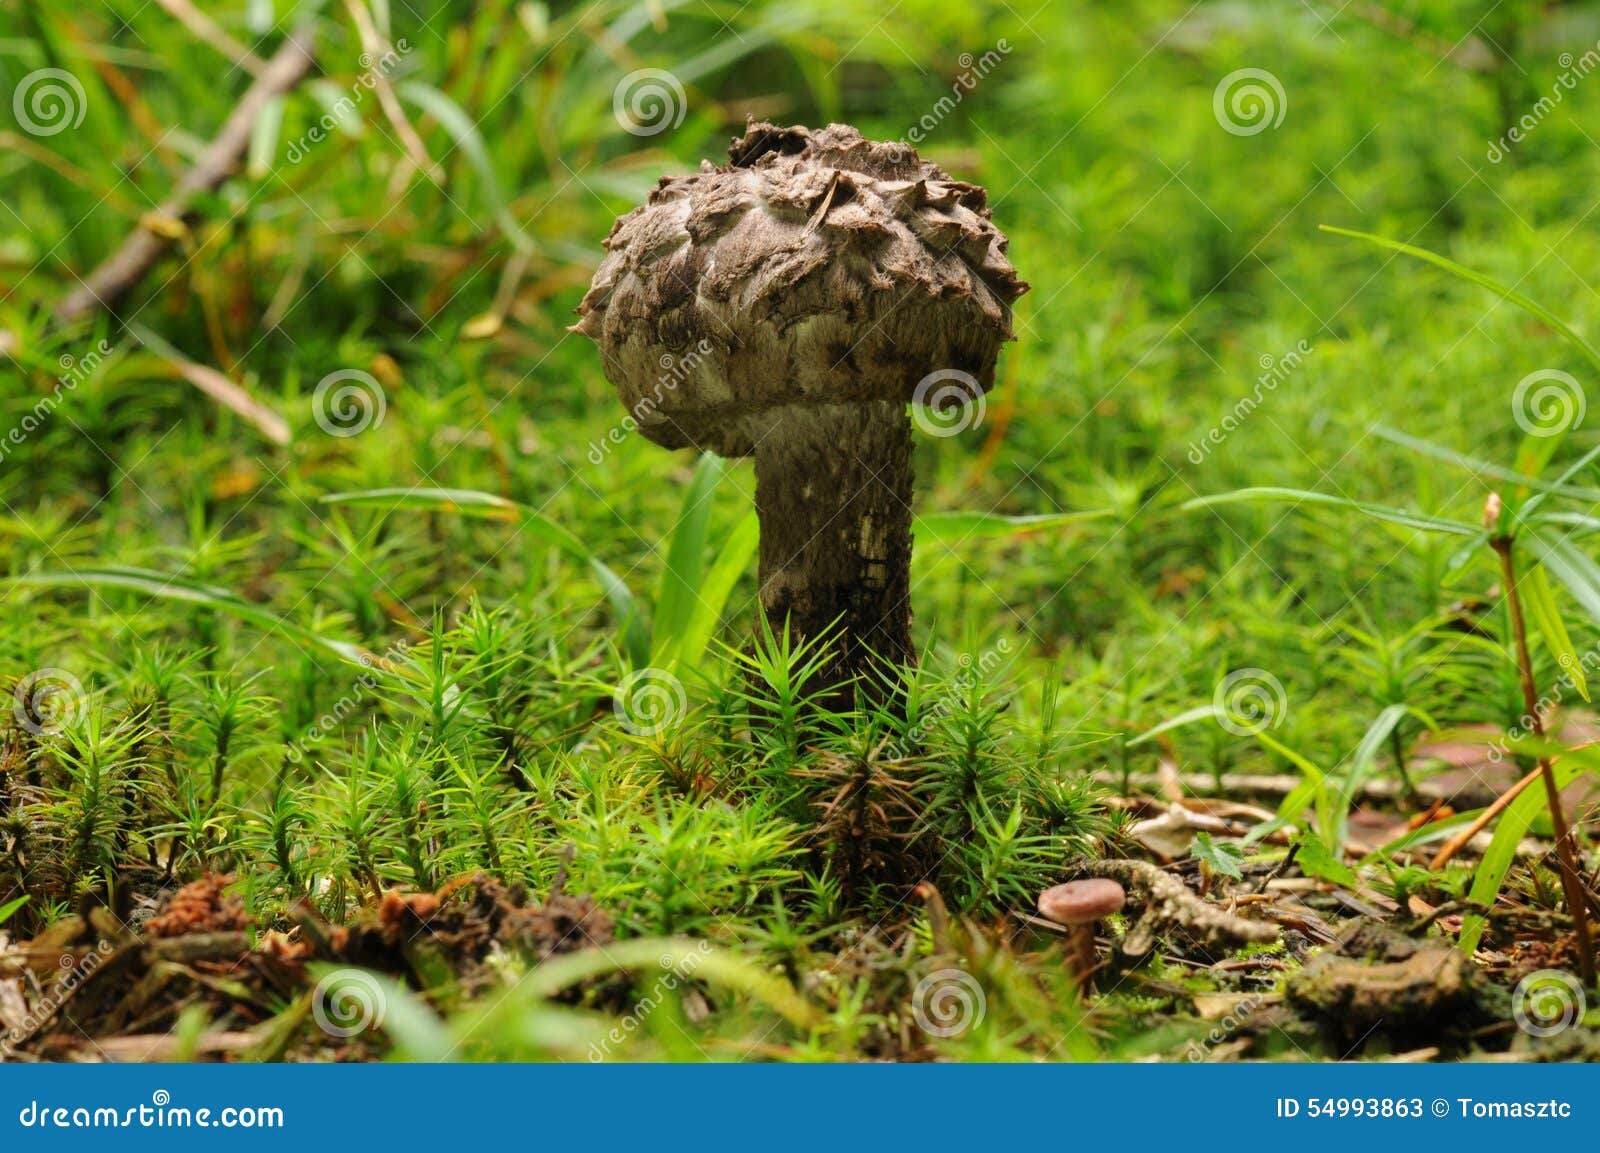 strobilomyces strobilaceus fungus